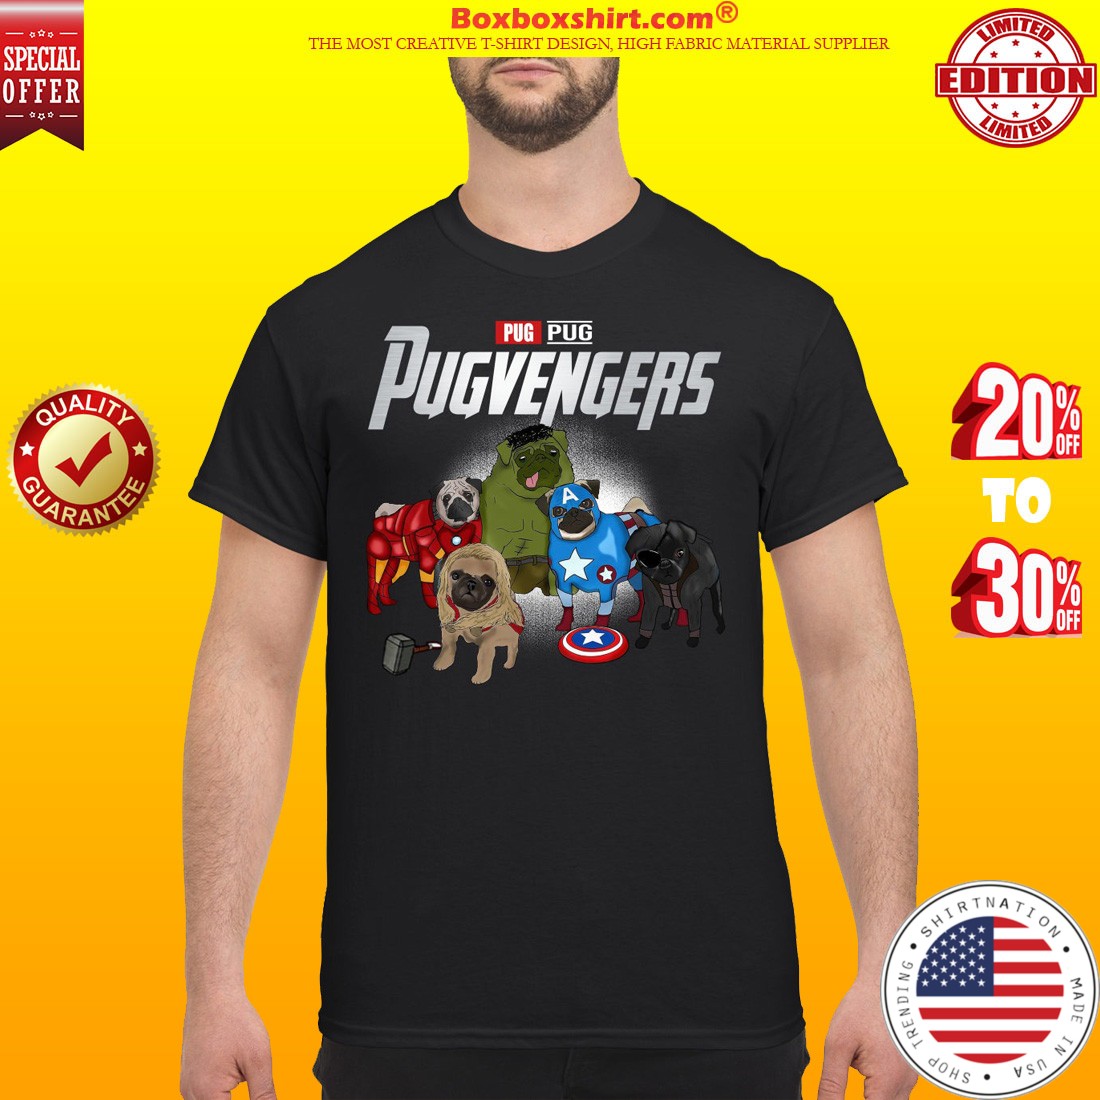 Pug avengers pugvengers shirt